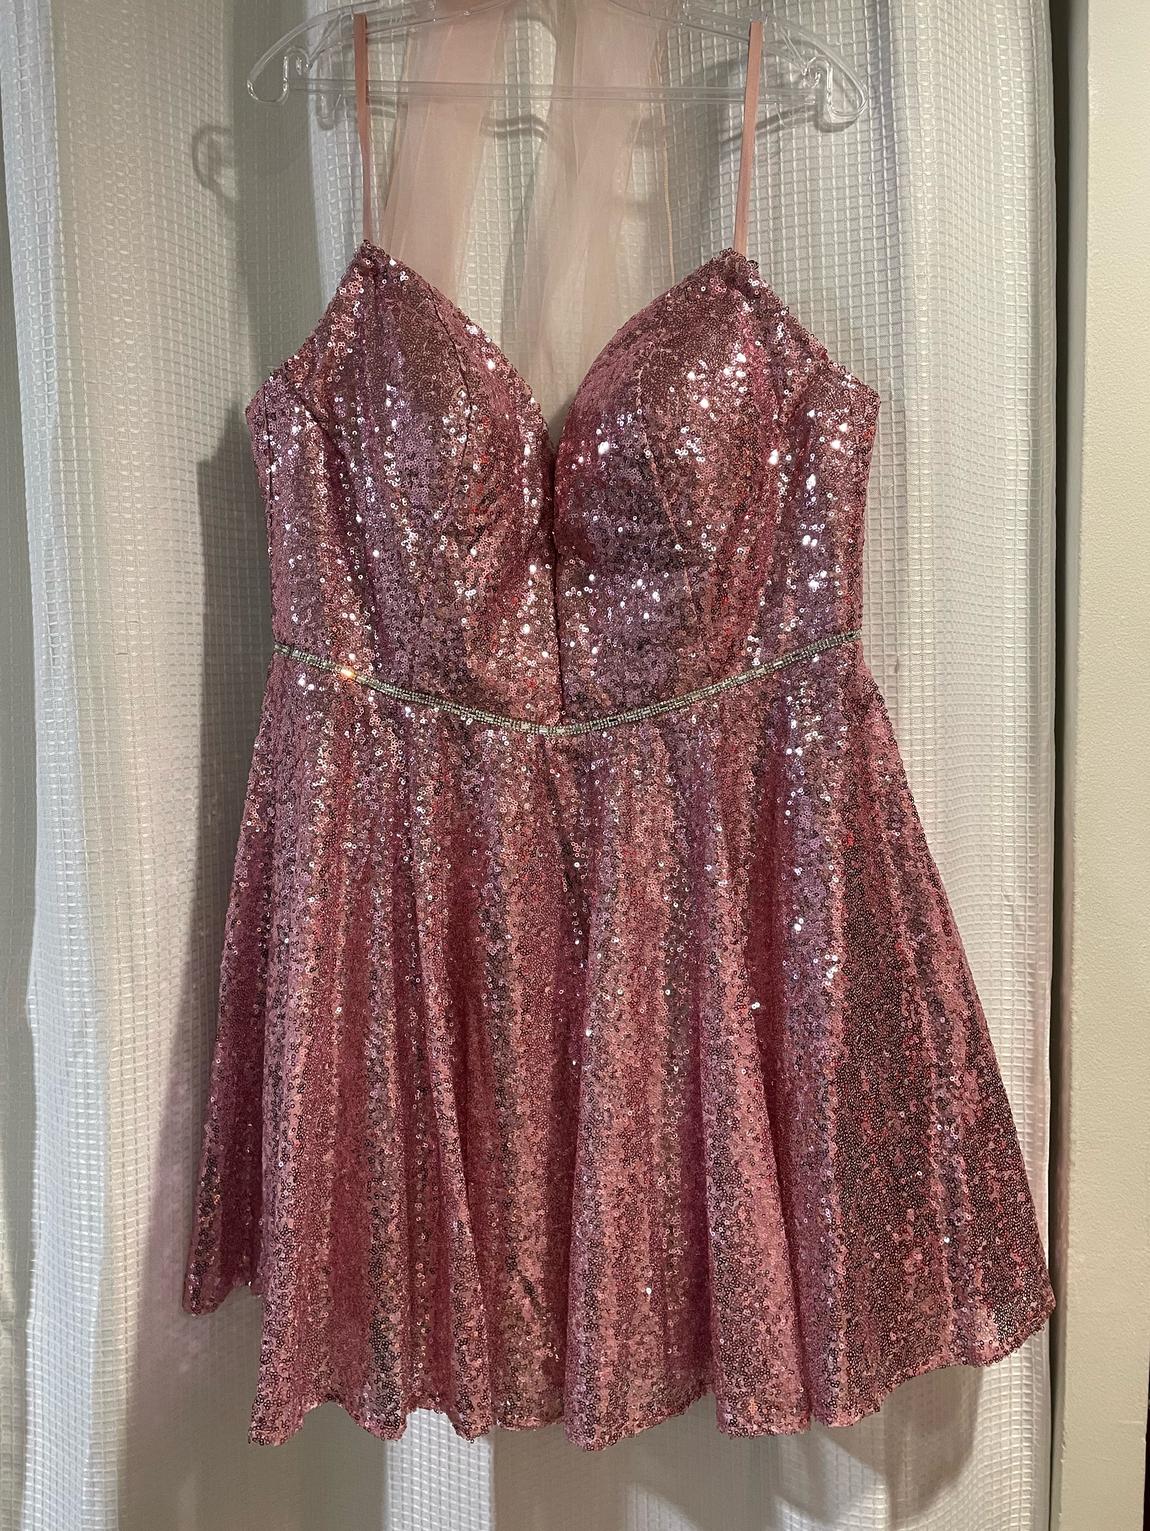 Elizabeth K Plus Size 16 Sequined Pink Cocktail Dress on Queenly